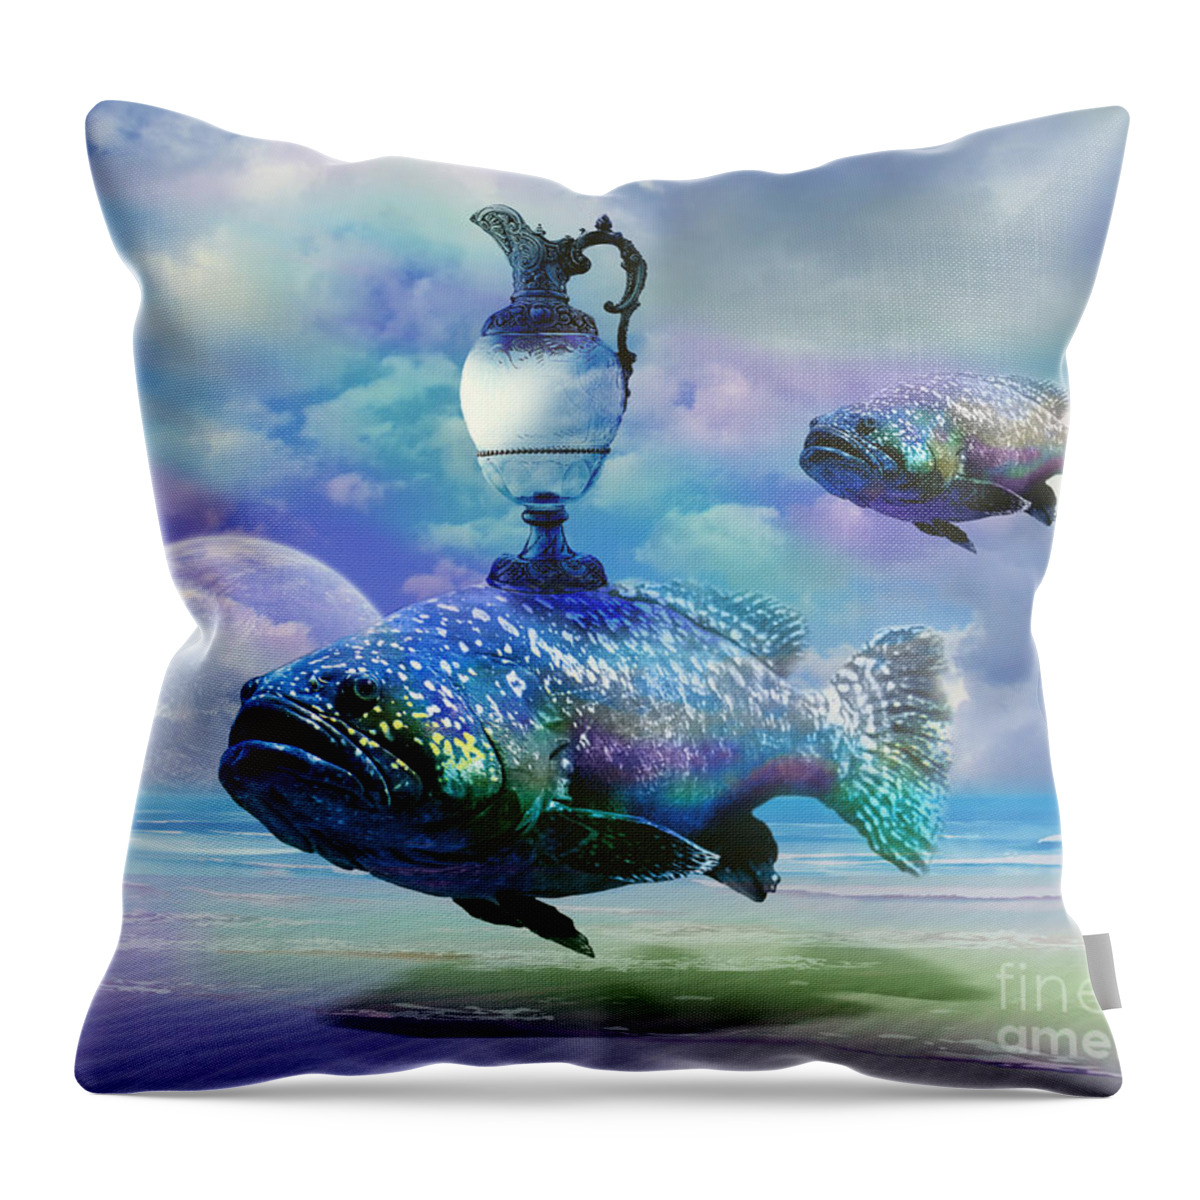 Fish Throw Pillow featuring the digital art Elixir of eternal life by Alexa Szlavics